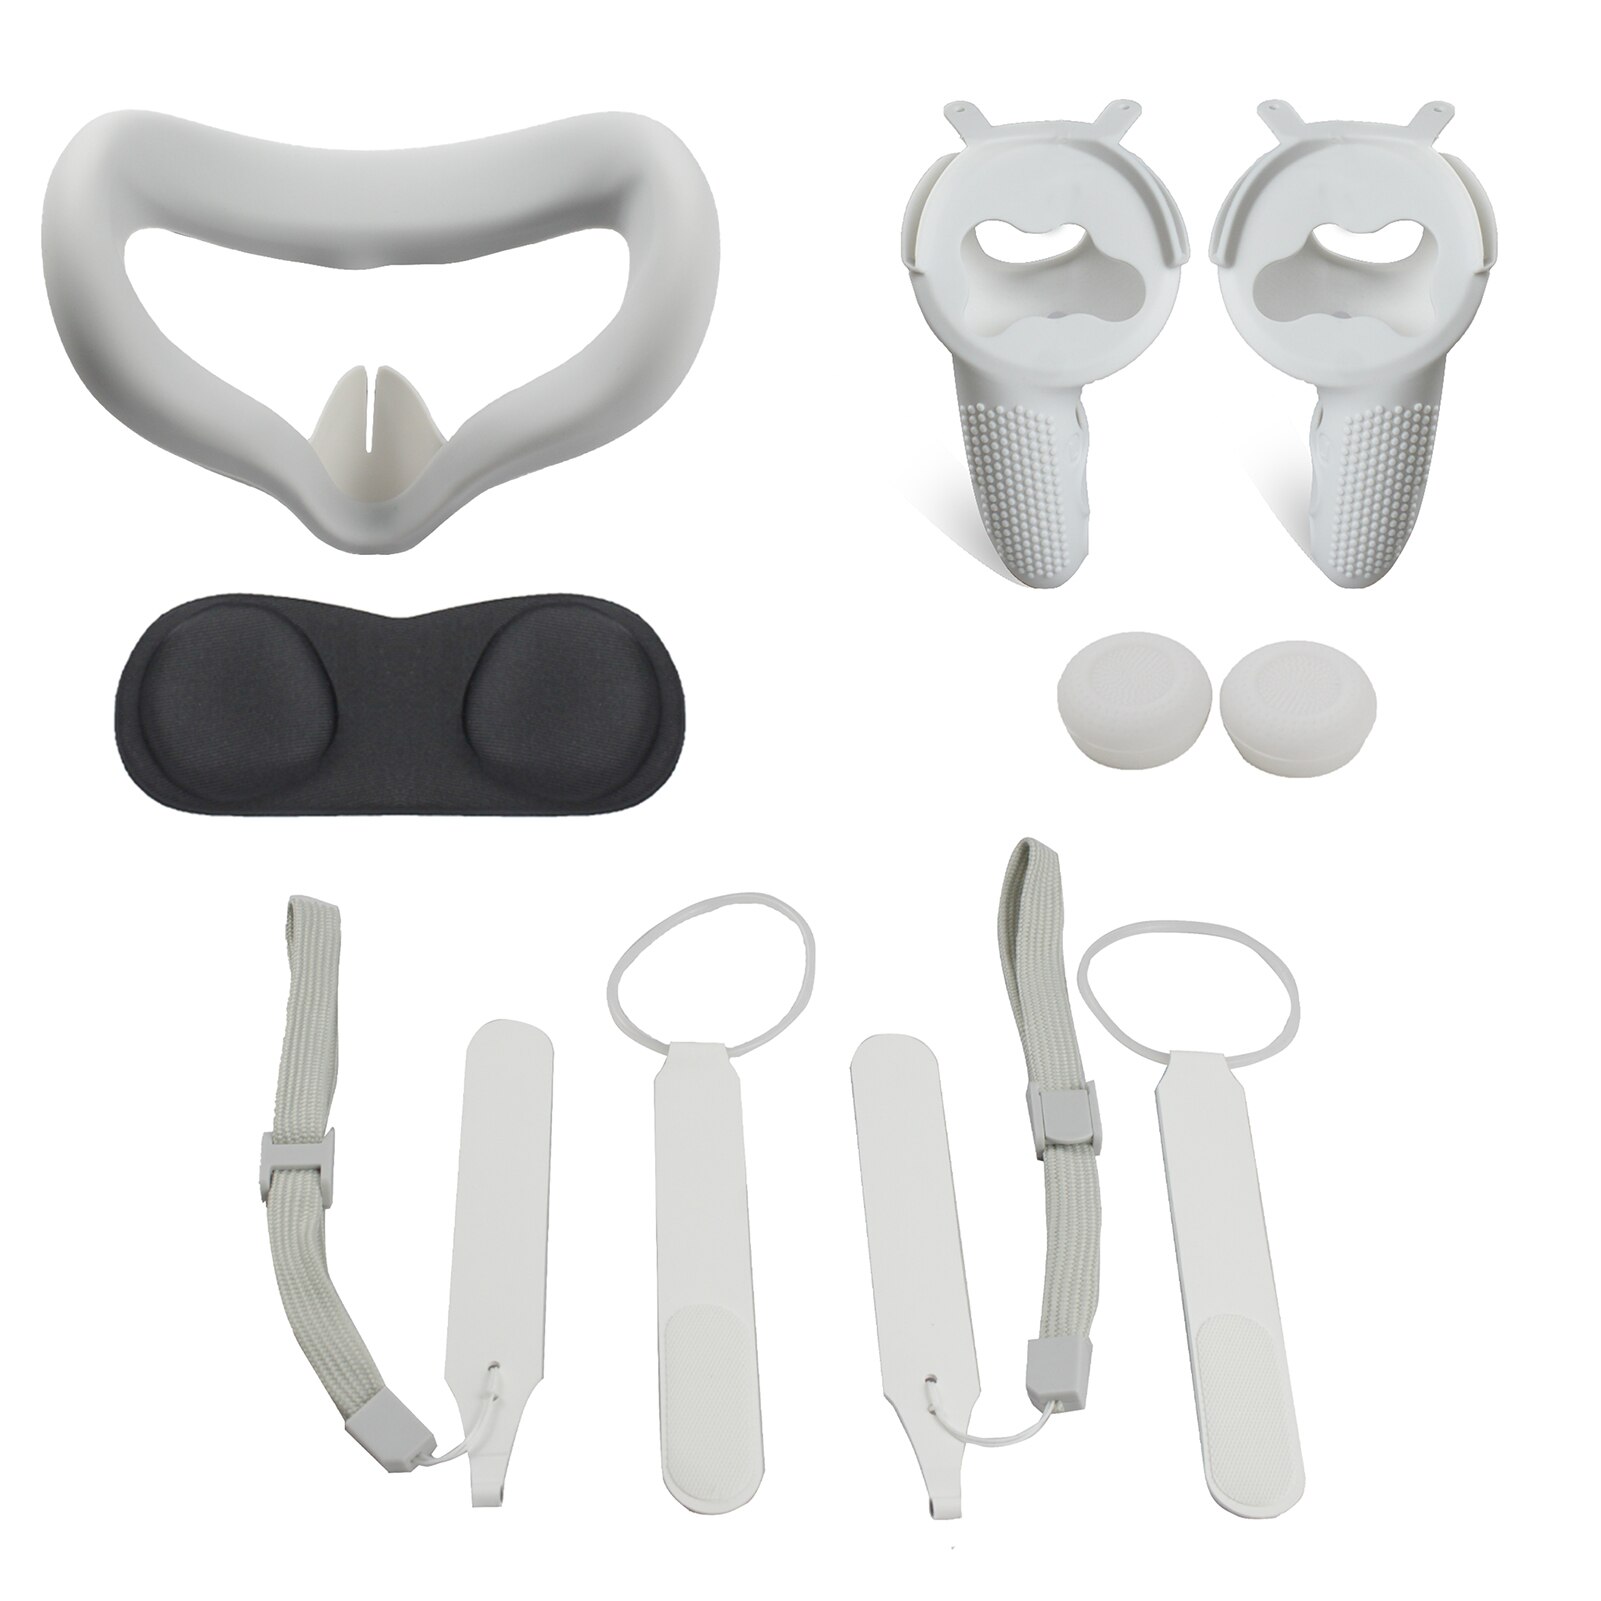 Beschermhoes Voor Oculus Quest 2 Vr Touch Controller Case Met Knuckle Band Handvat Grip Voor Oculus Quest 2 Vr accessoires: White